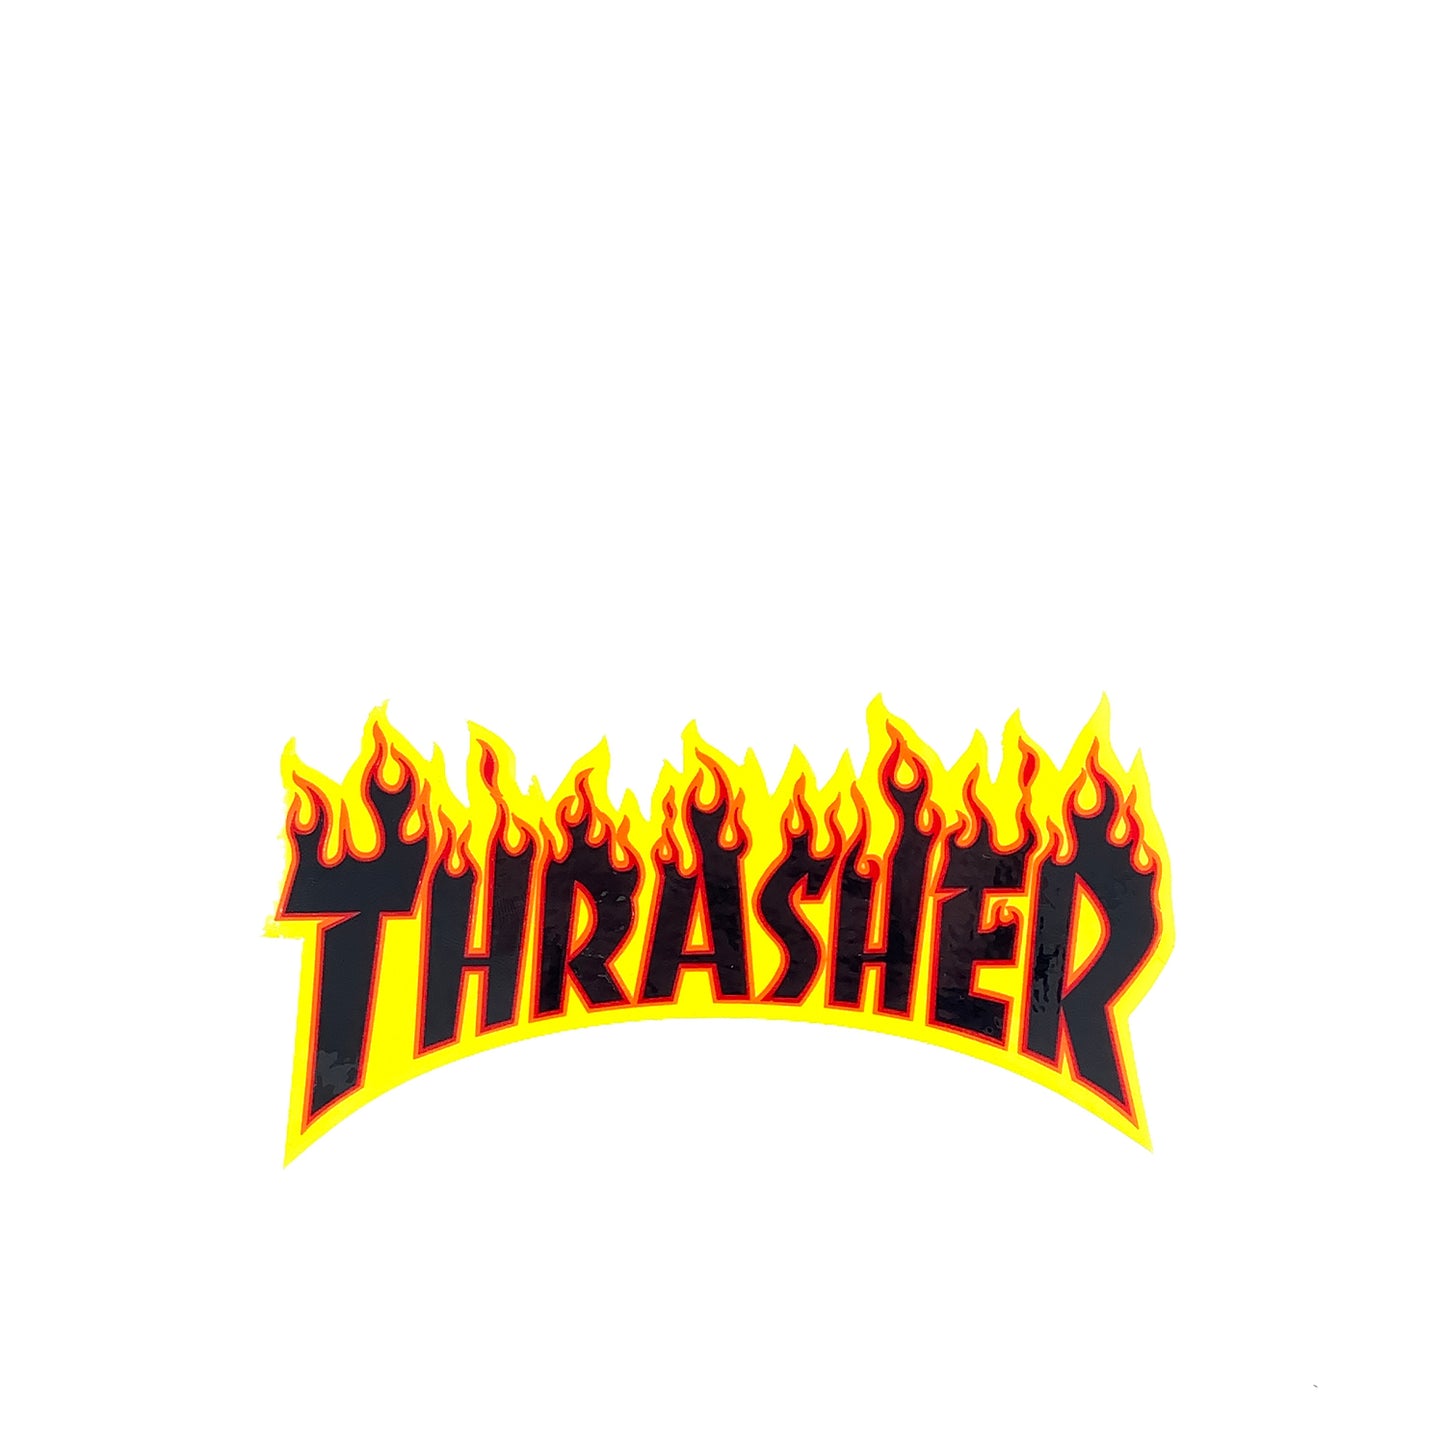 Thrasher Flame Logo Sticker Medium - Yellow / Red / Black - Prime Delux Store